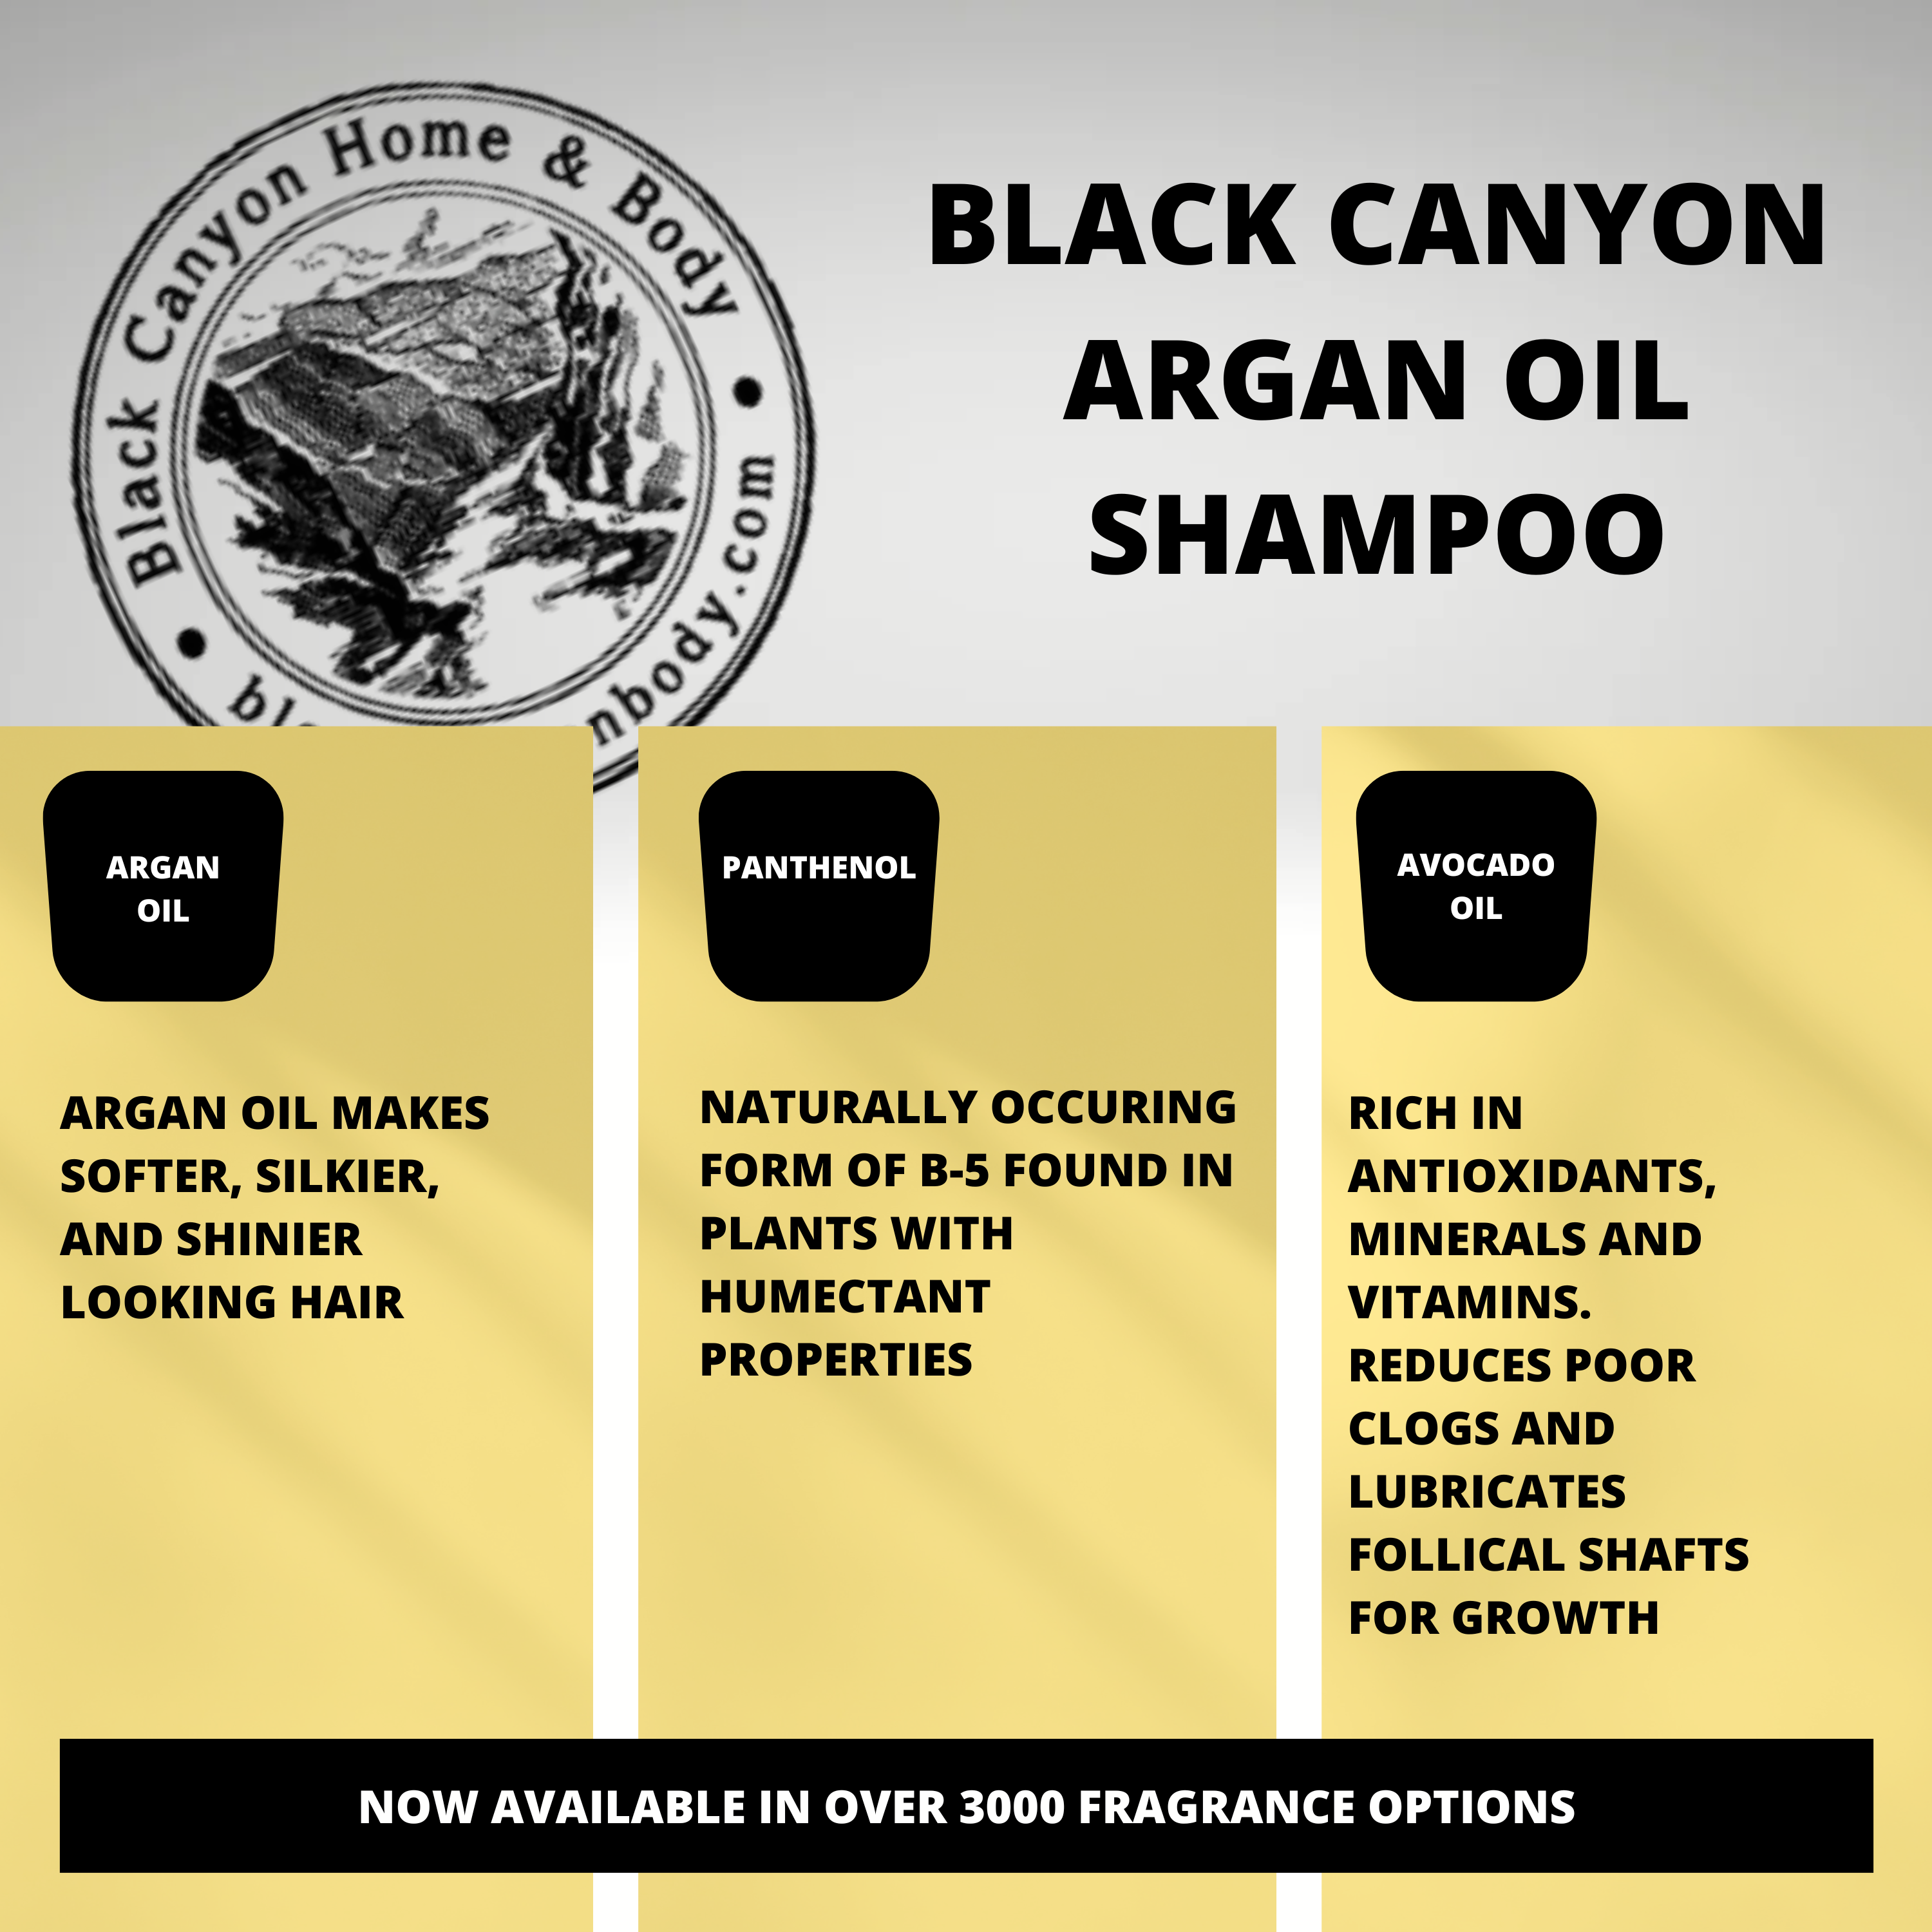 Black Canyon Black Currant & Jasmine Scented Shampoo with Argan Oil